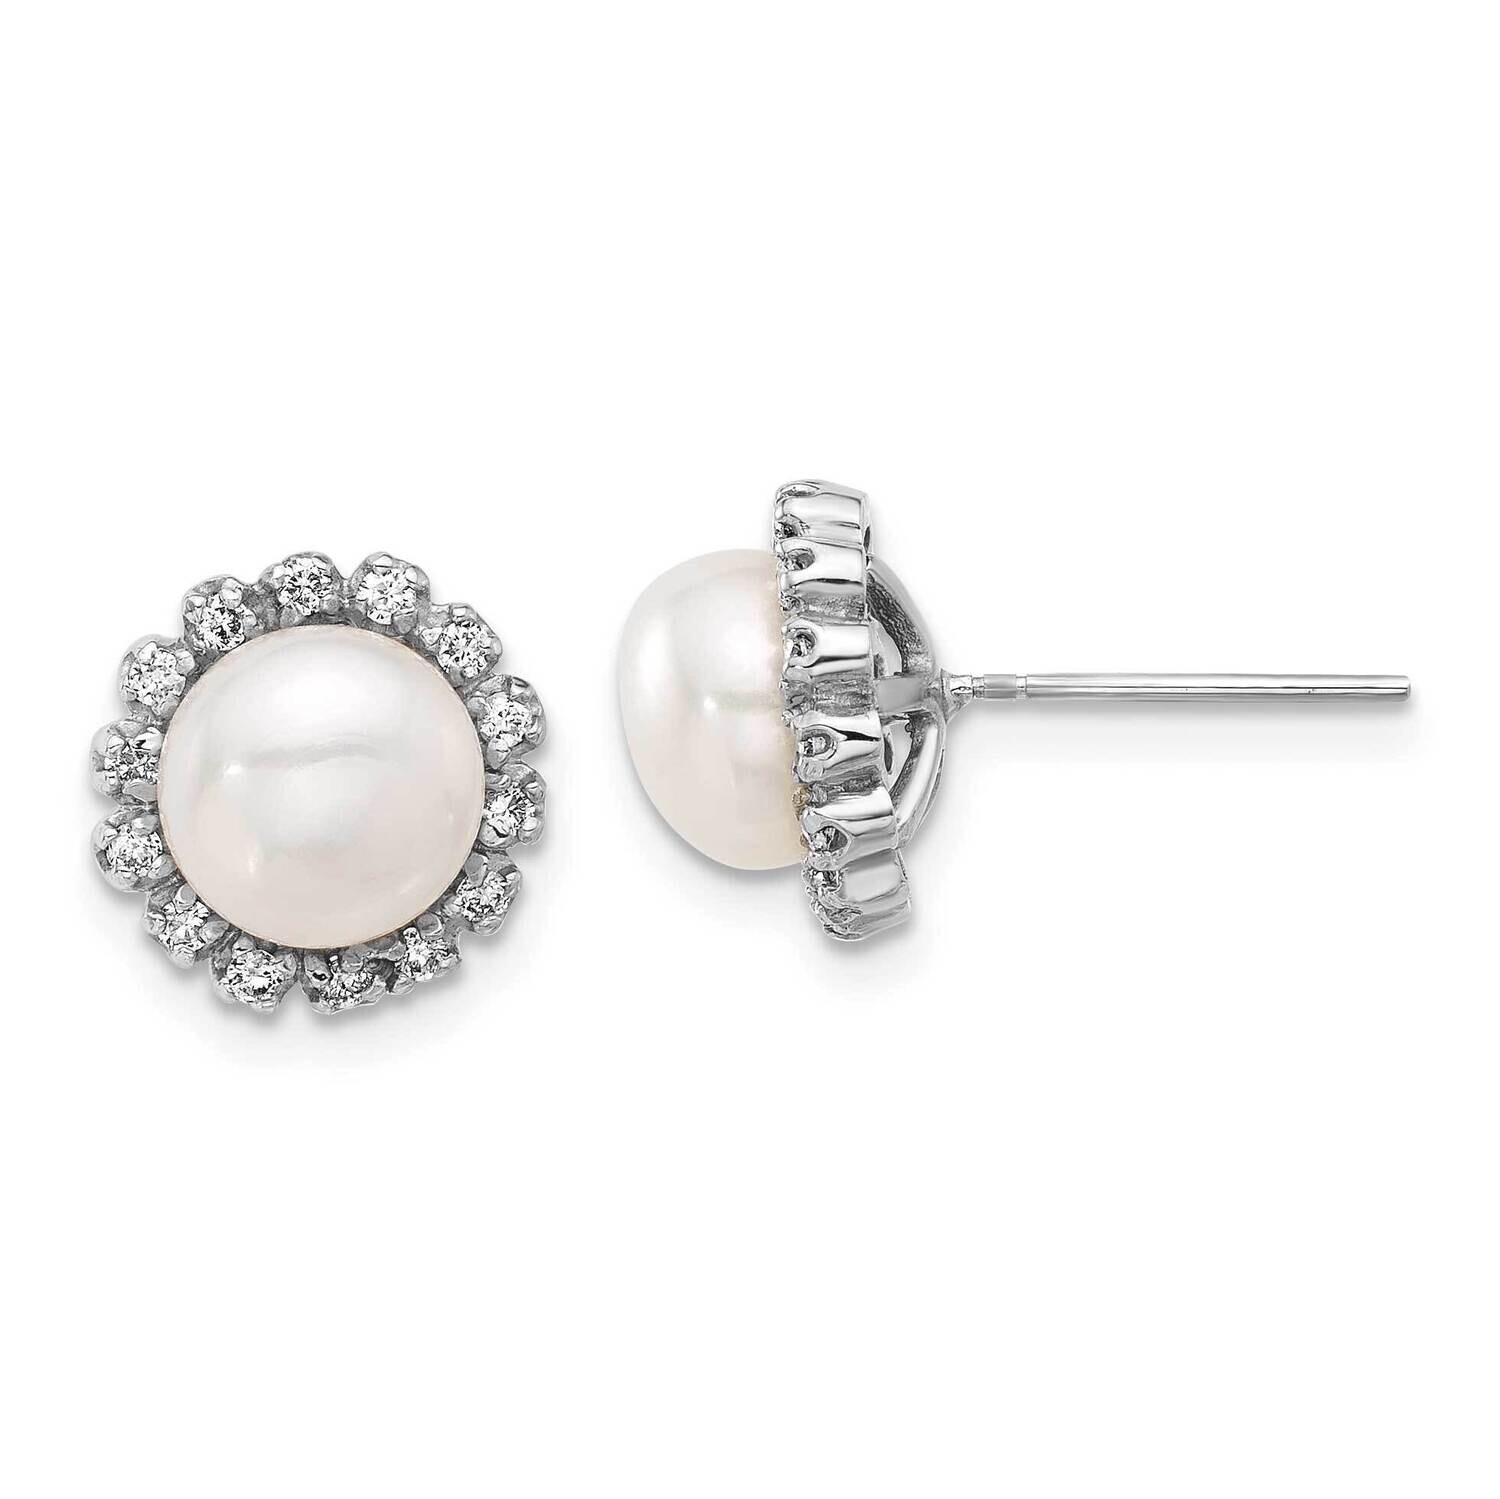 7-8mm Button White Fwc Pearl .28Ct Diamond Post Earrings 14k White Gold XFW848E